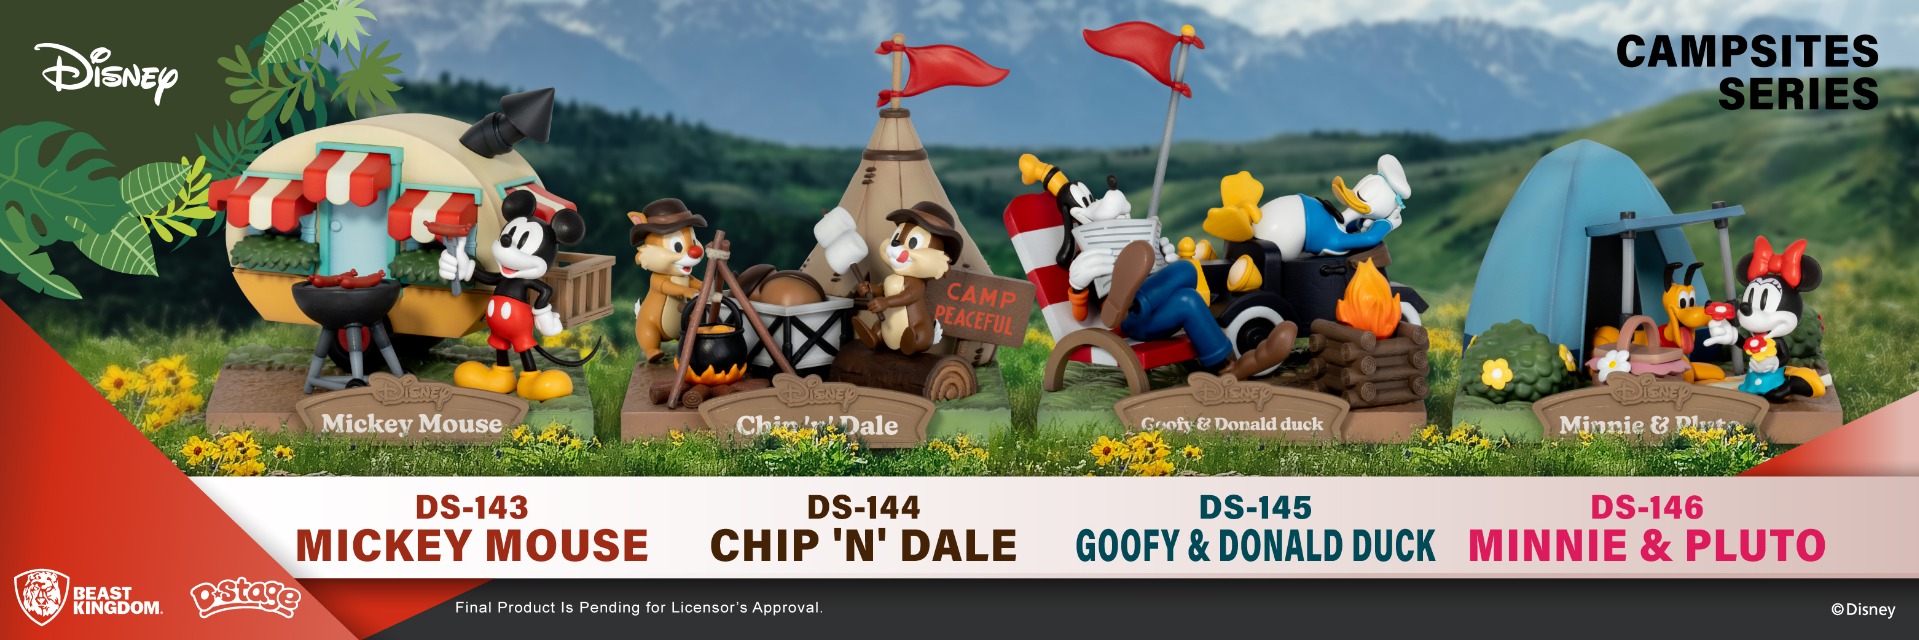 DS-143-Campsites Series-Mickey Mouse, DS-144-Campsites Series-Chip 'n' Dale, DS-145-Campsites Series-Goofy & Donald Duck, DS-146-Campsites Series-Minnie & Pluto